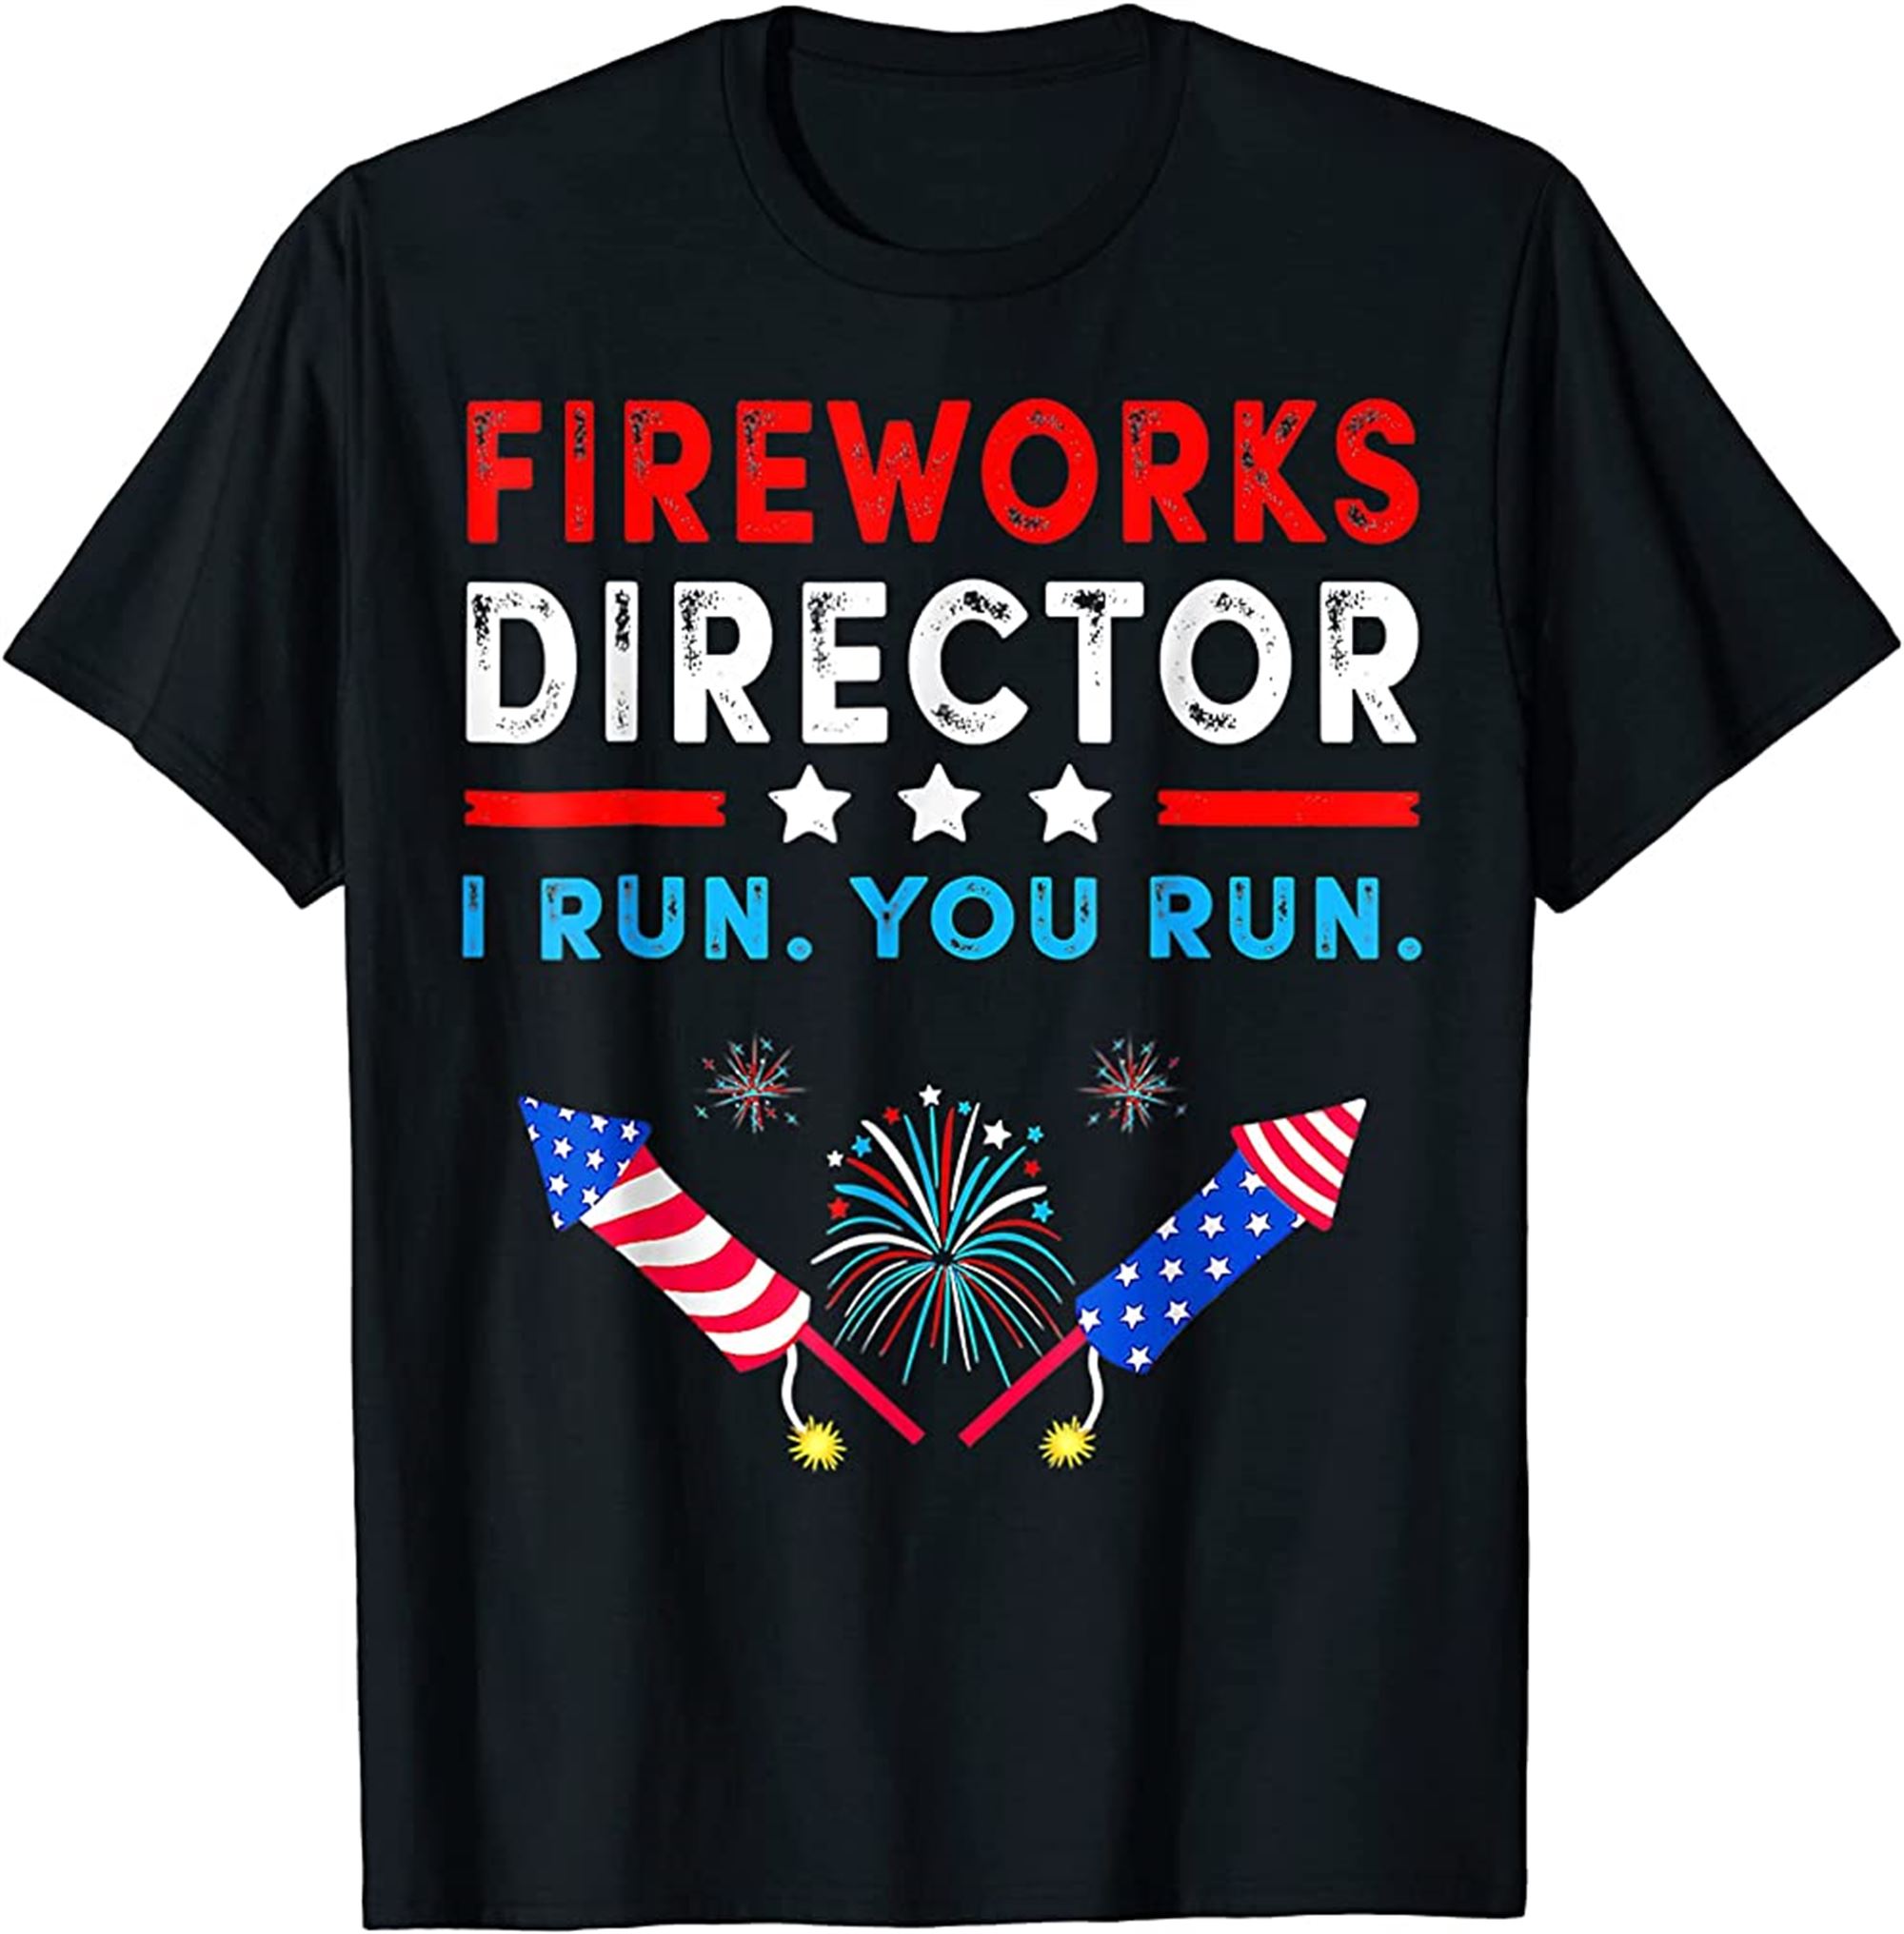 Firework Director Technician I Run You Run 4th Of July T-shirt Size Up To 5xl